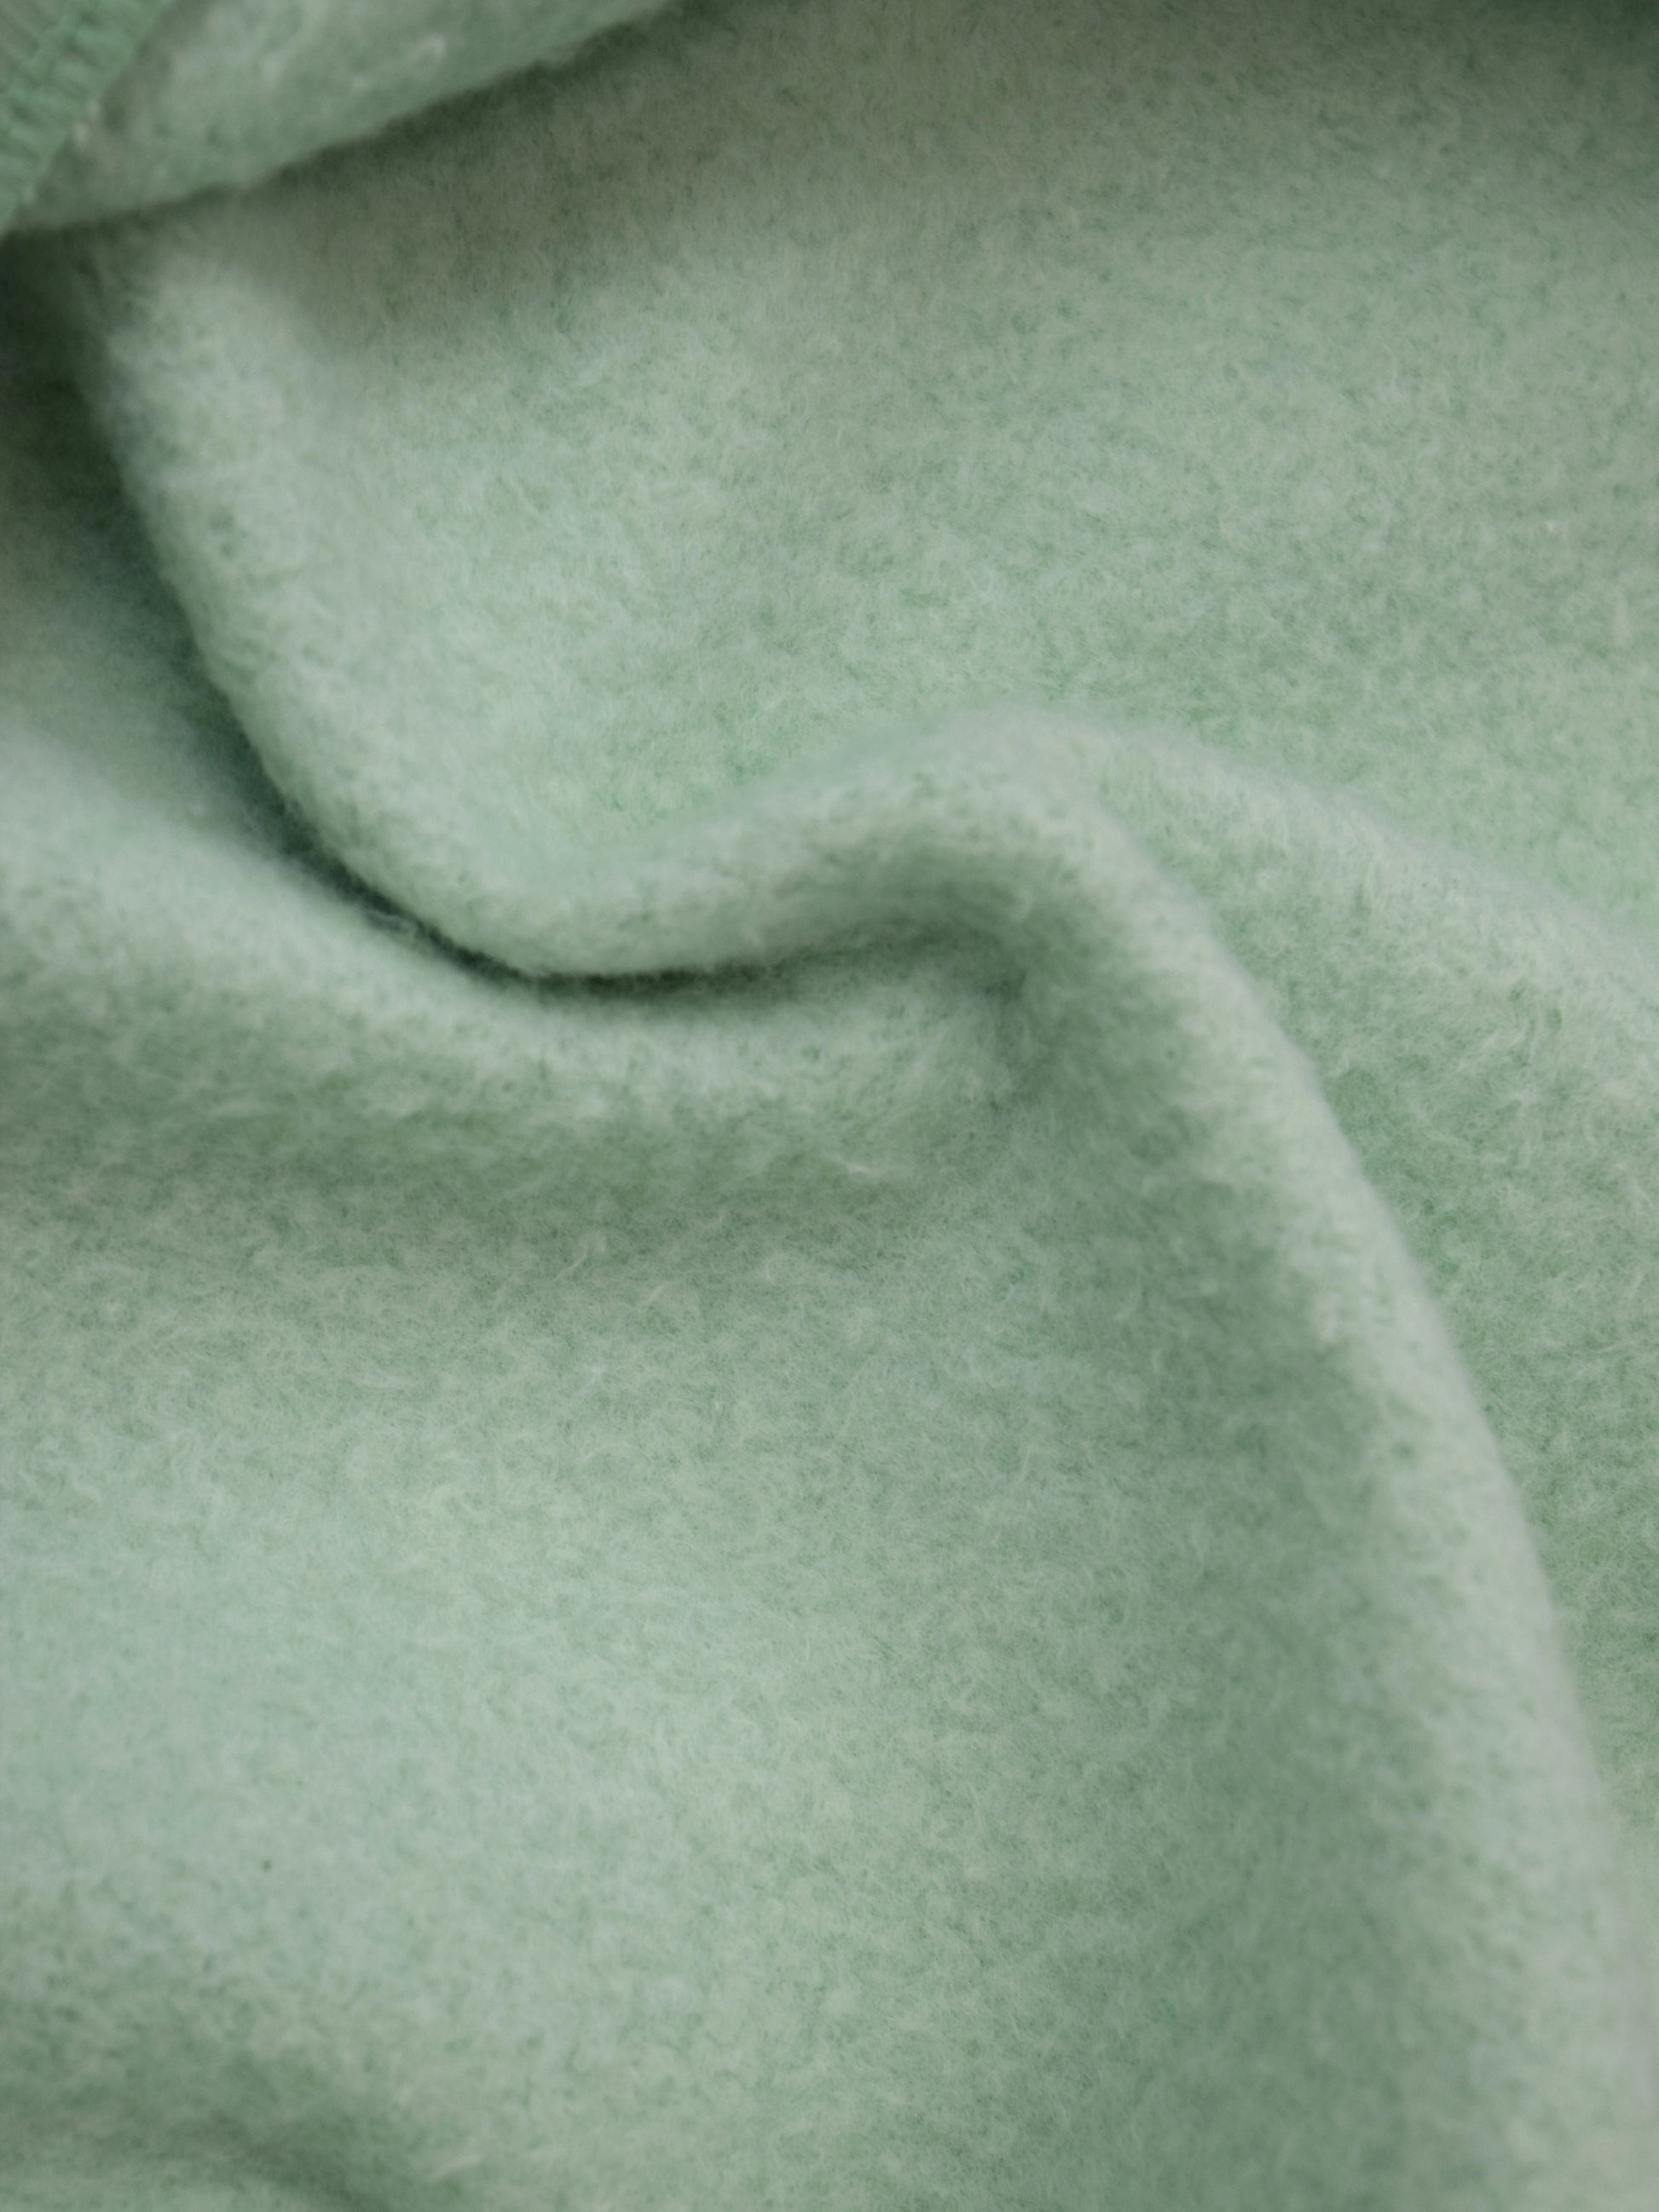 Close up of fleece interior of sweatpants